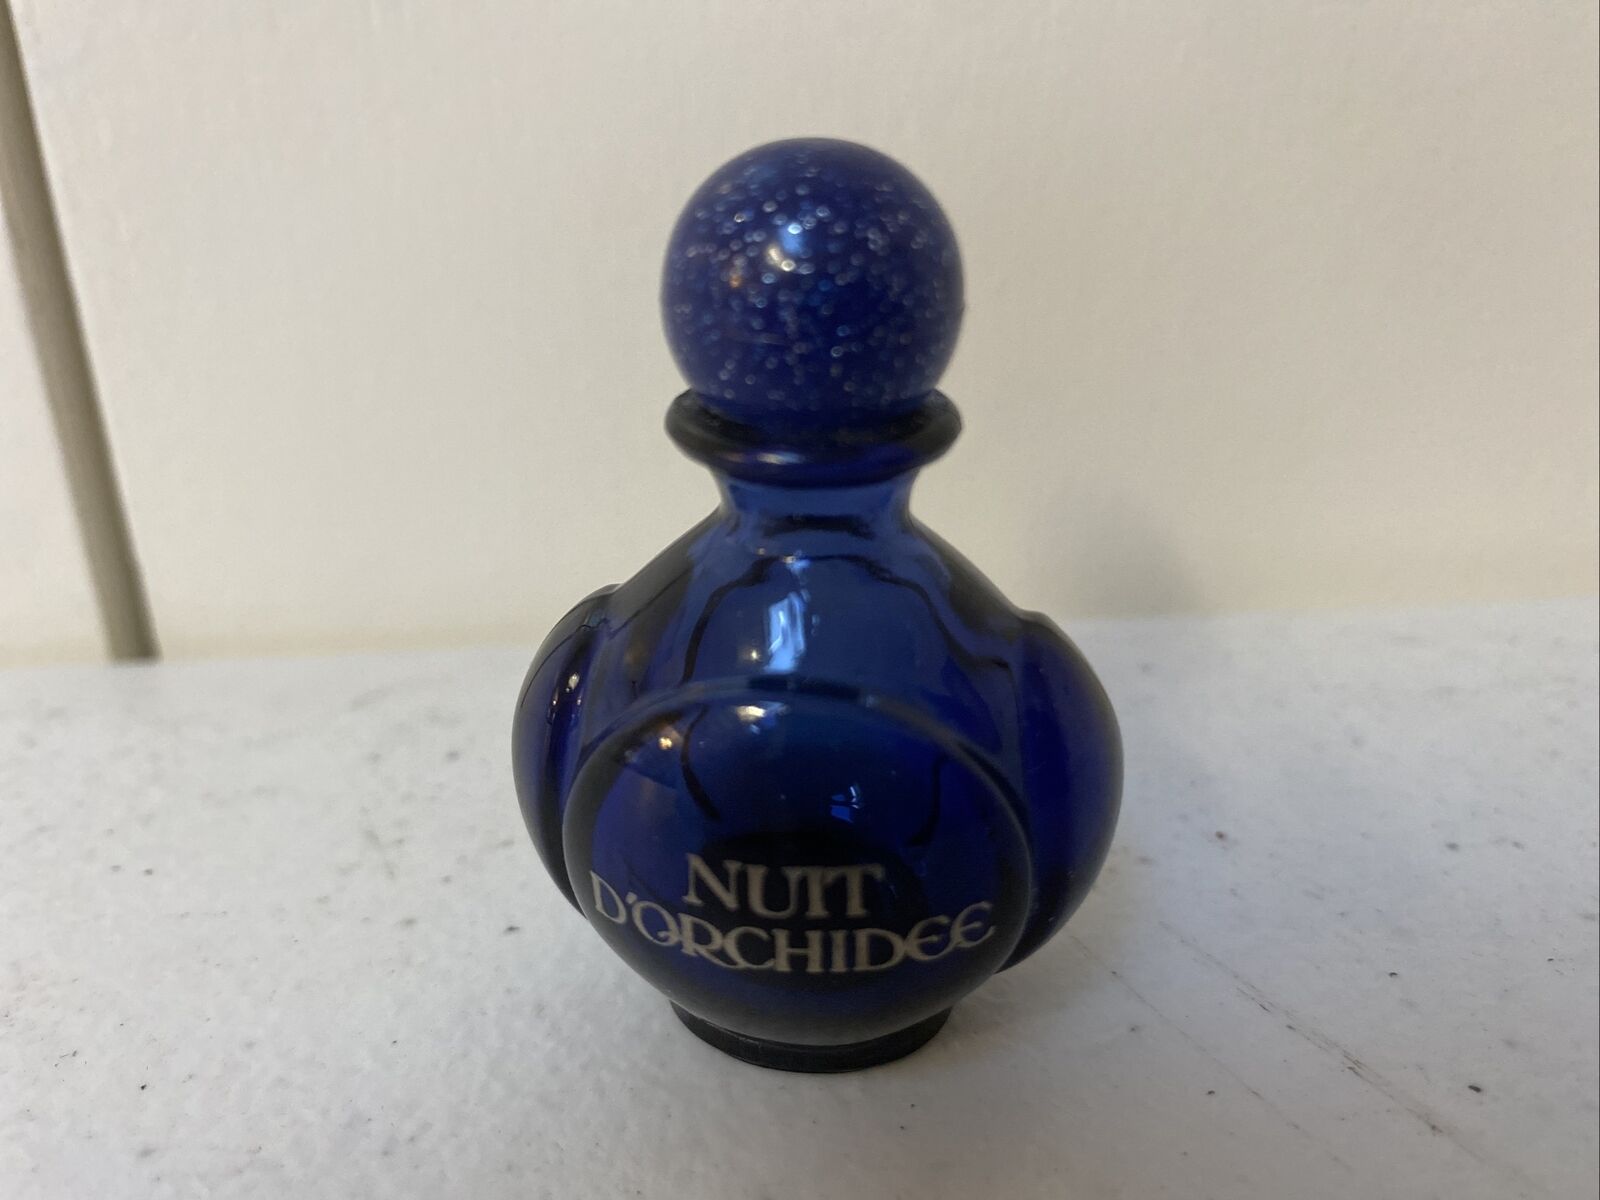 Yves Rocher Nuit D'orchidee Edt Concentree .25 Oz Miniature Bottle